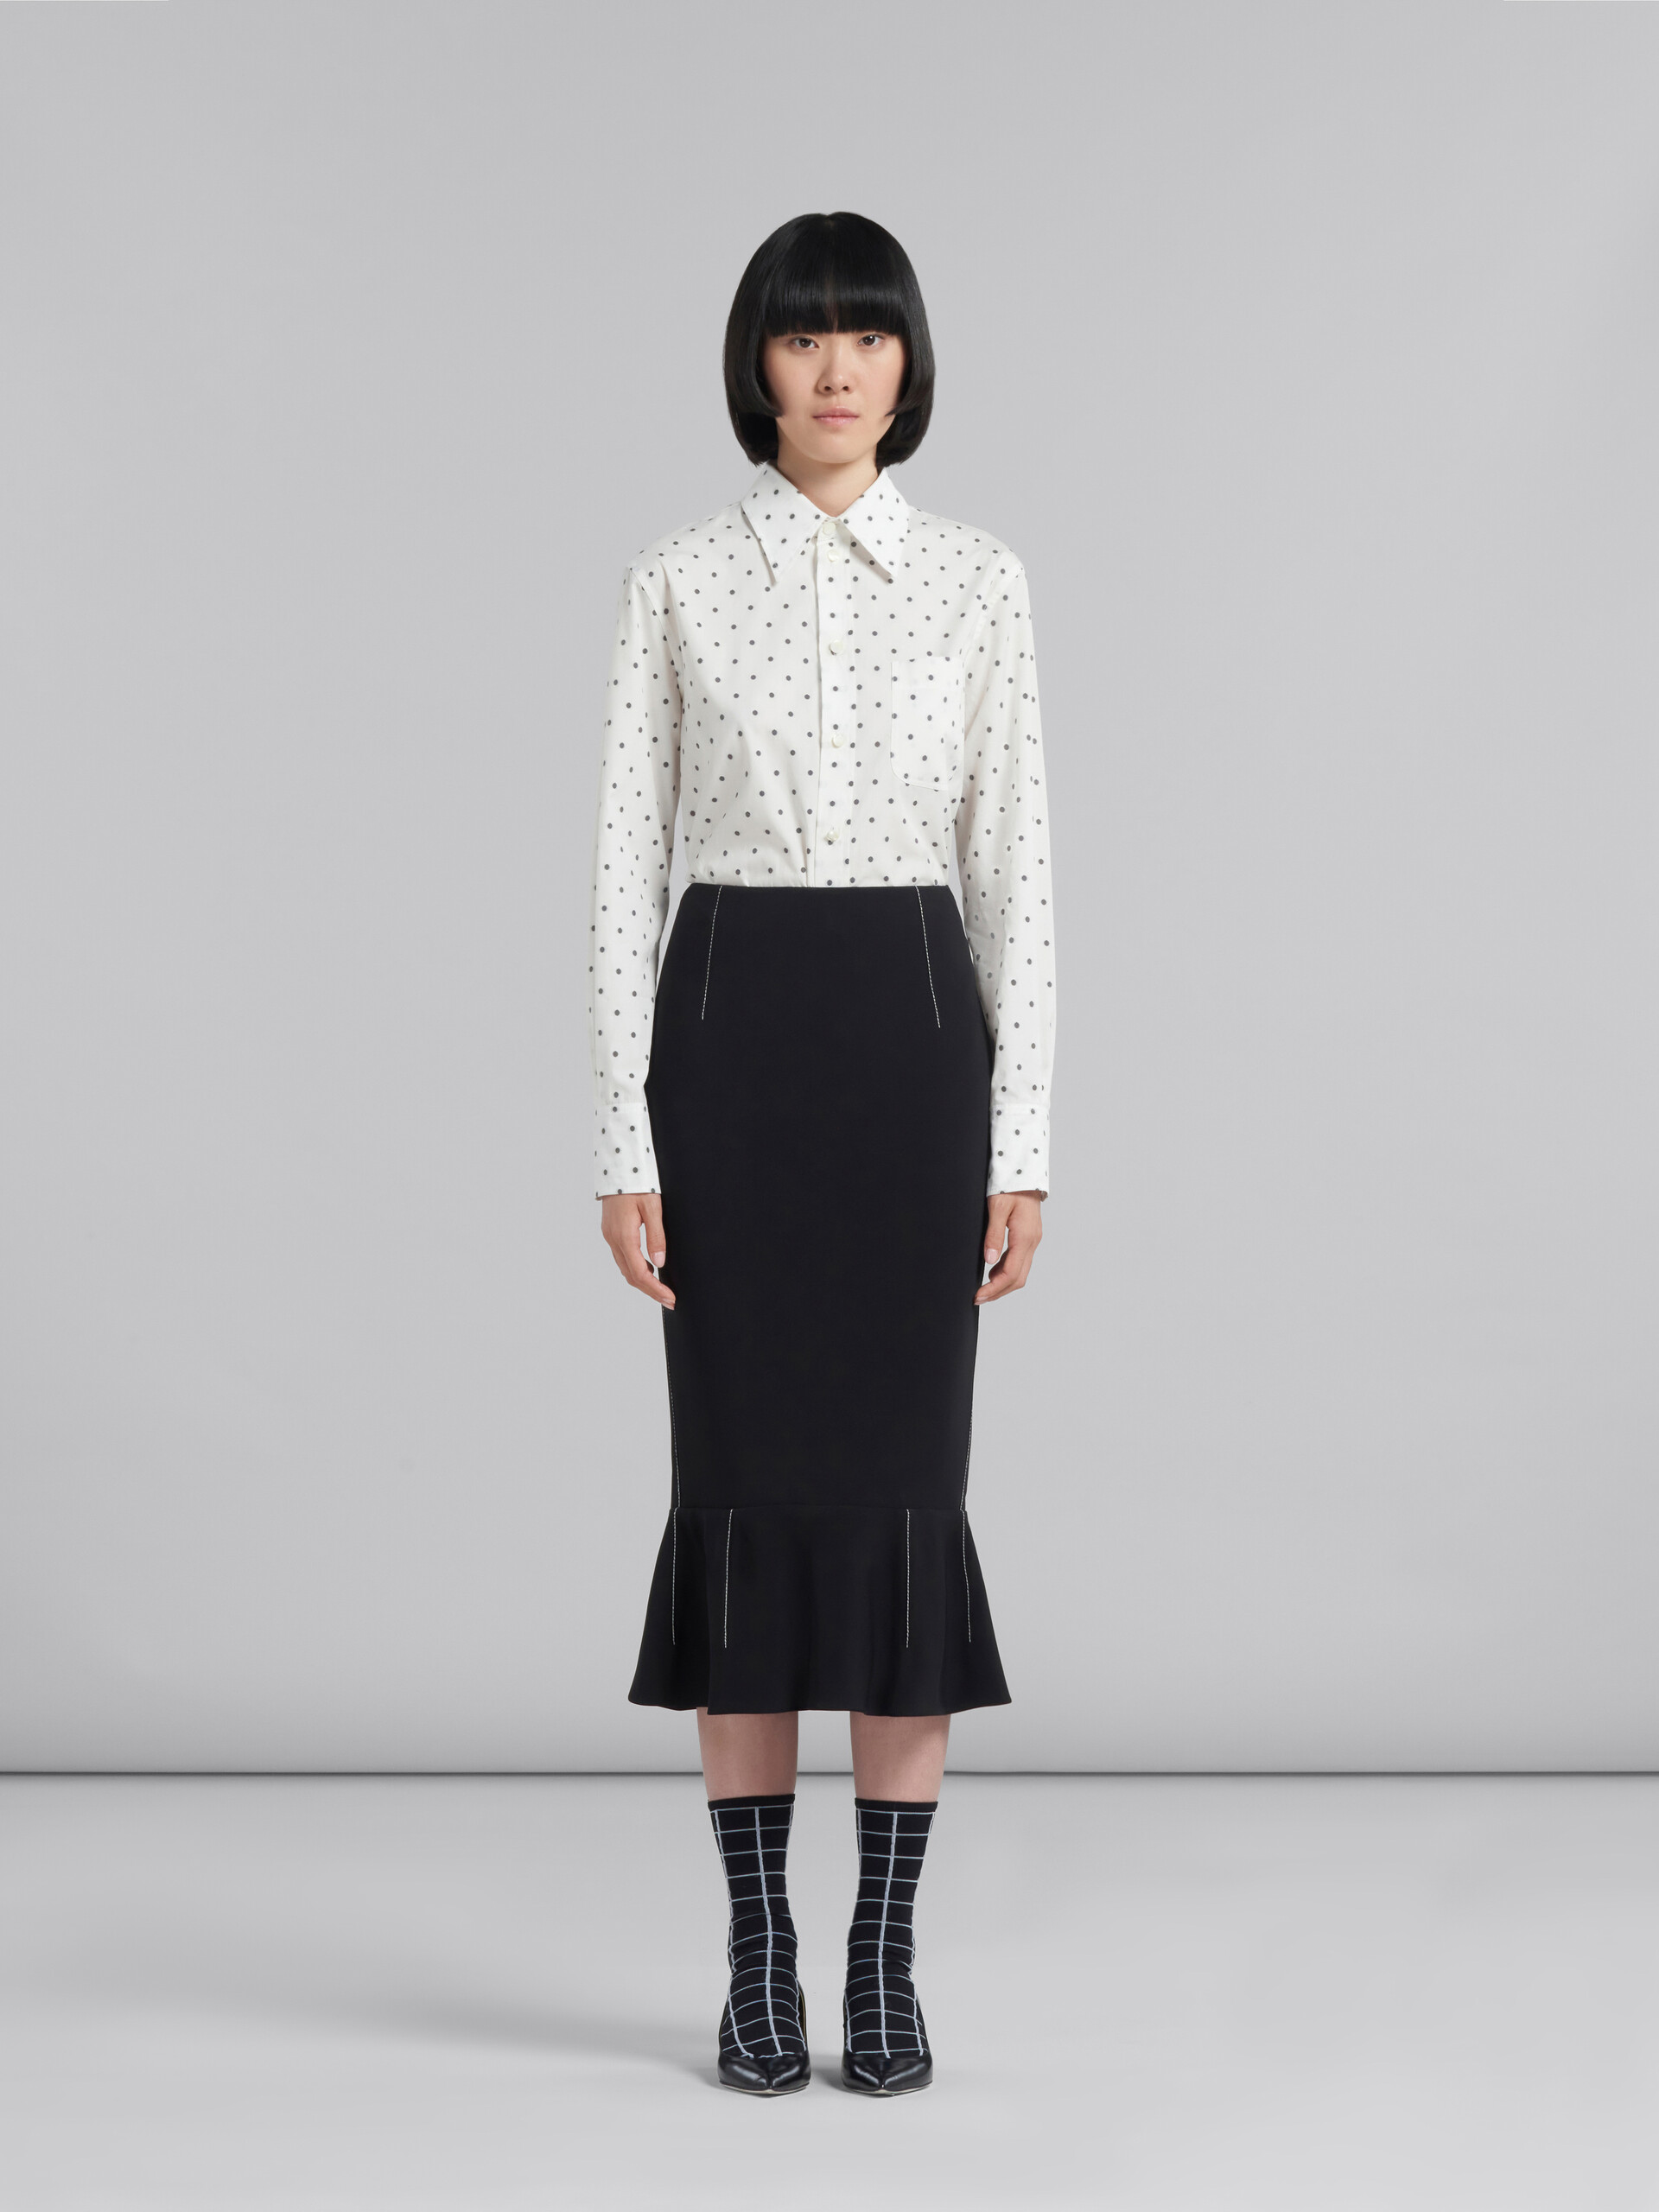 Black cady sheath skirt with flounce hem - Skirts - Image 2